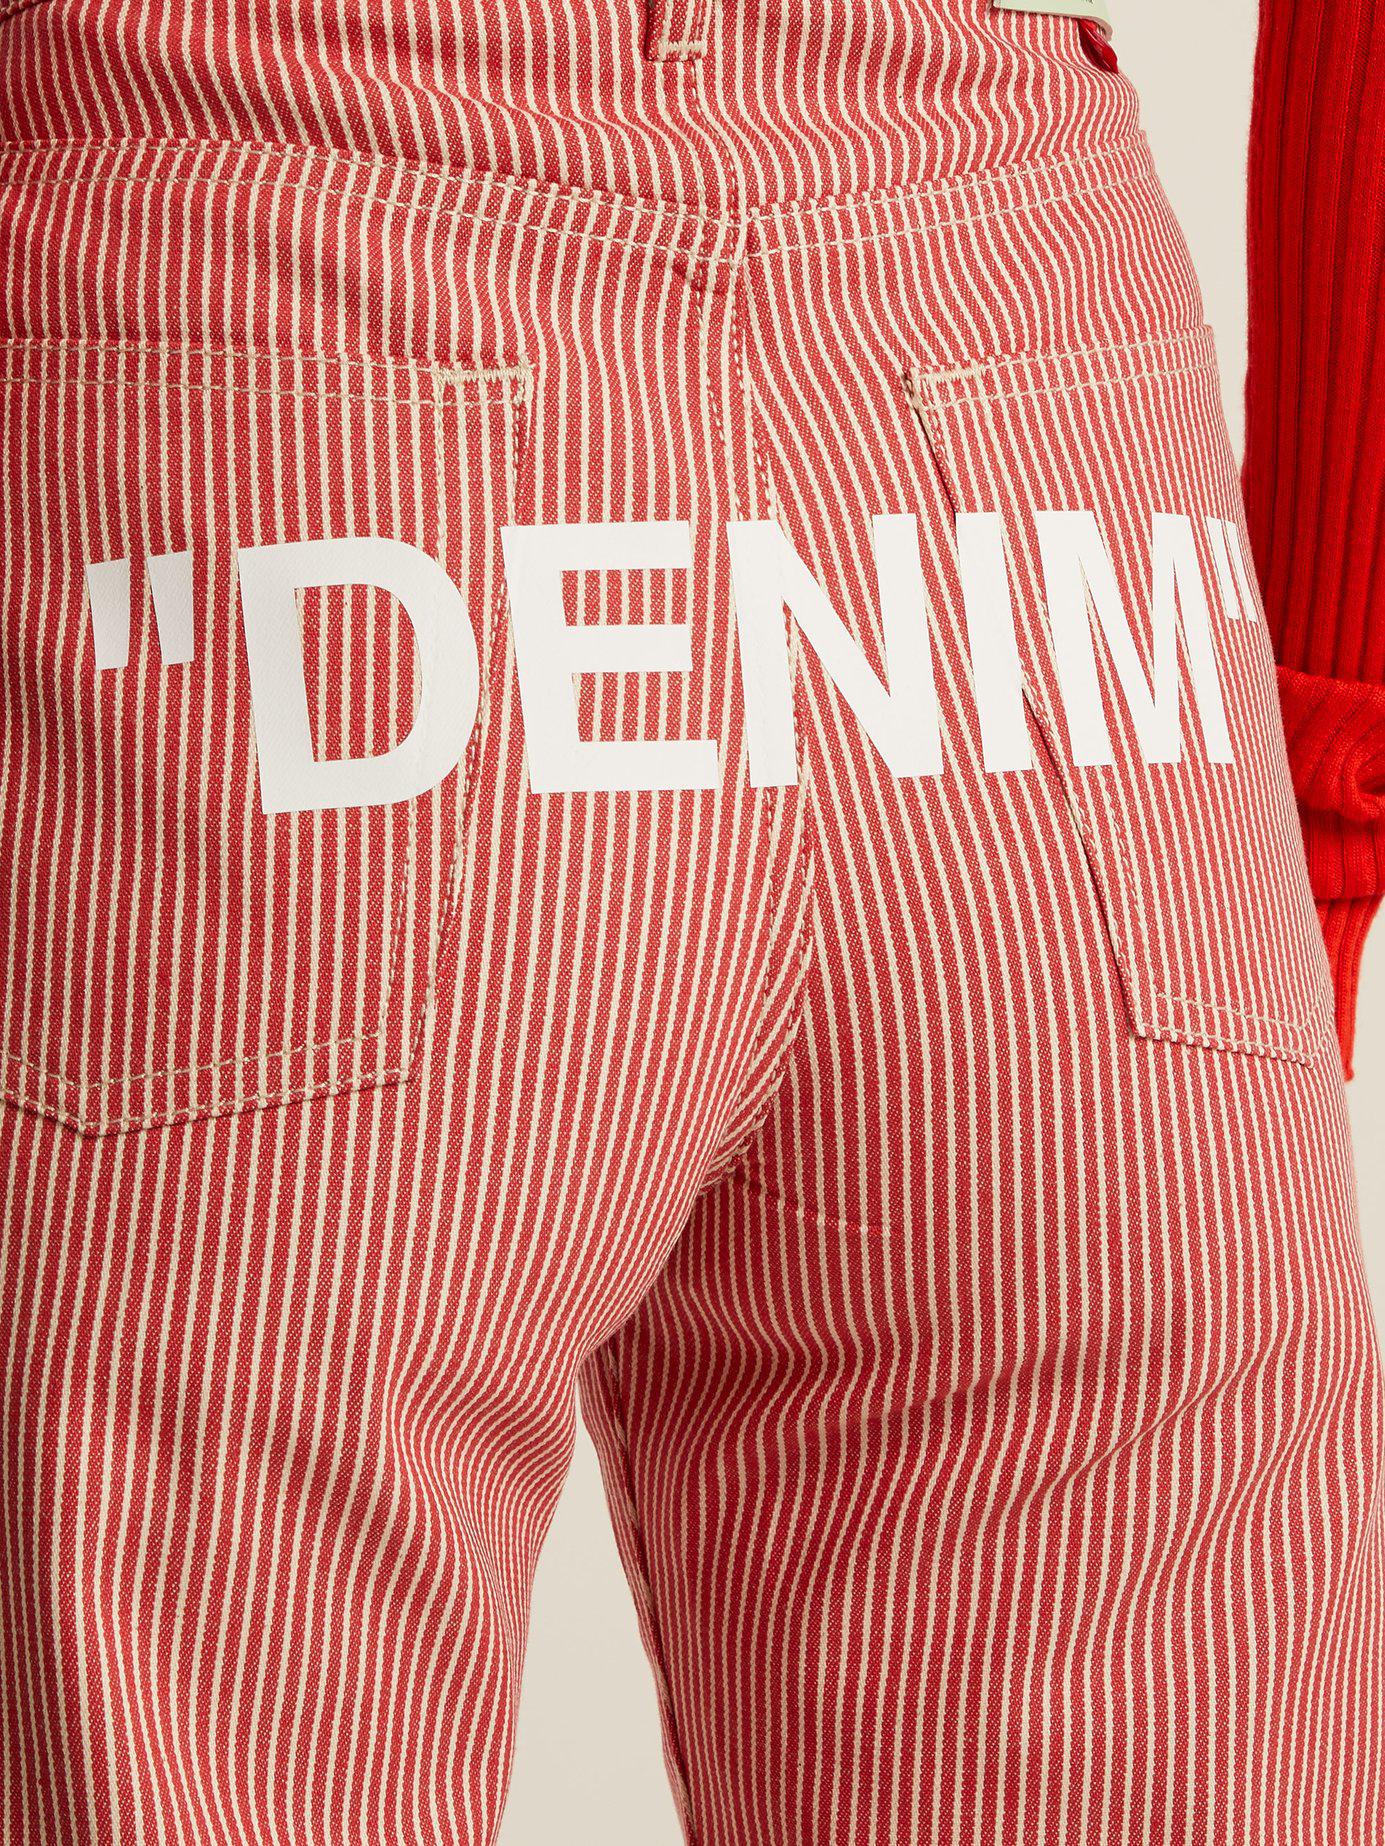 Off-White c/o Abloh Denim Striped High Rise Leg Jeans in Red Stripe (Red) - Lyst